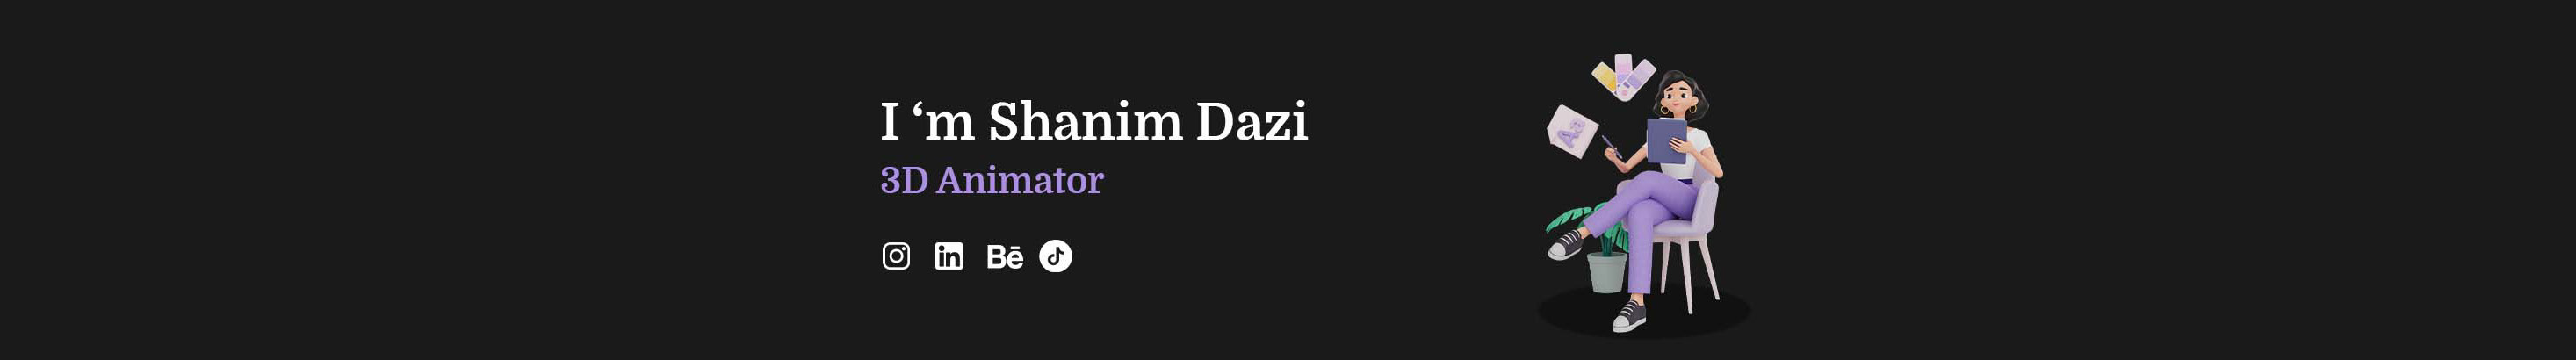 Shanim Dazi's profile banner